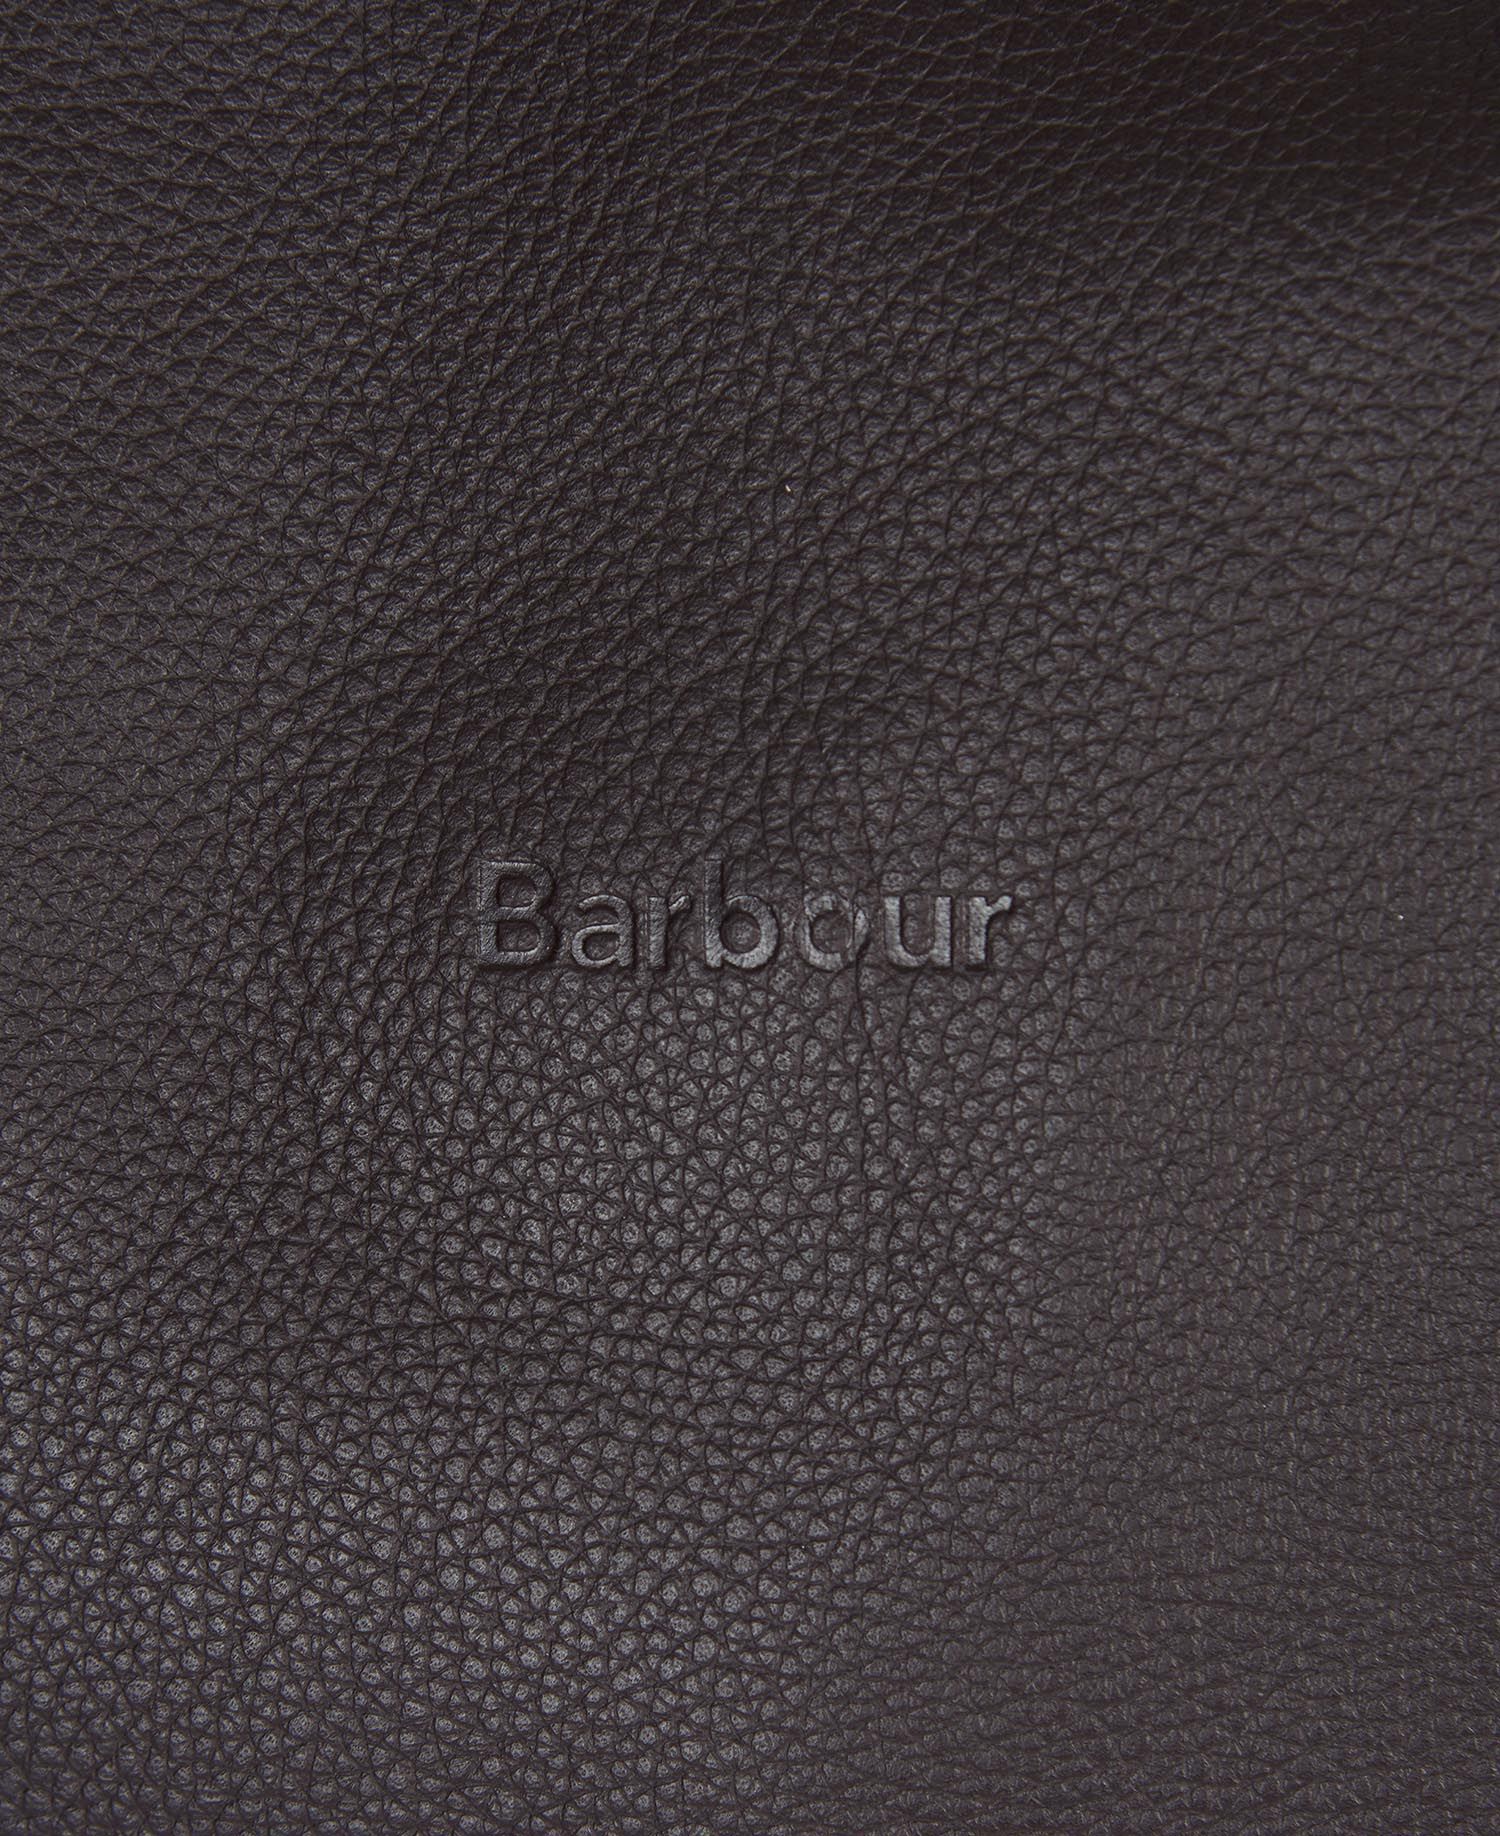 Barbour Leather Medium Travel Explorer in Brown | Barbour